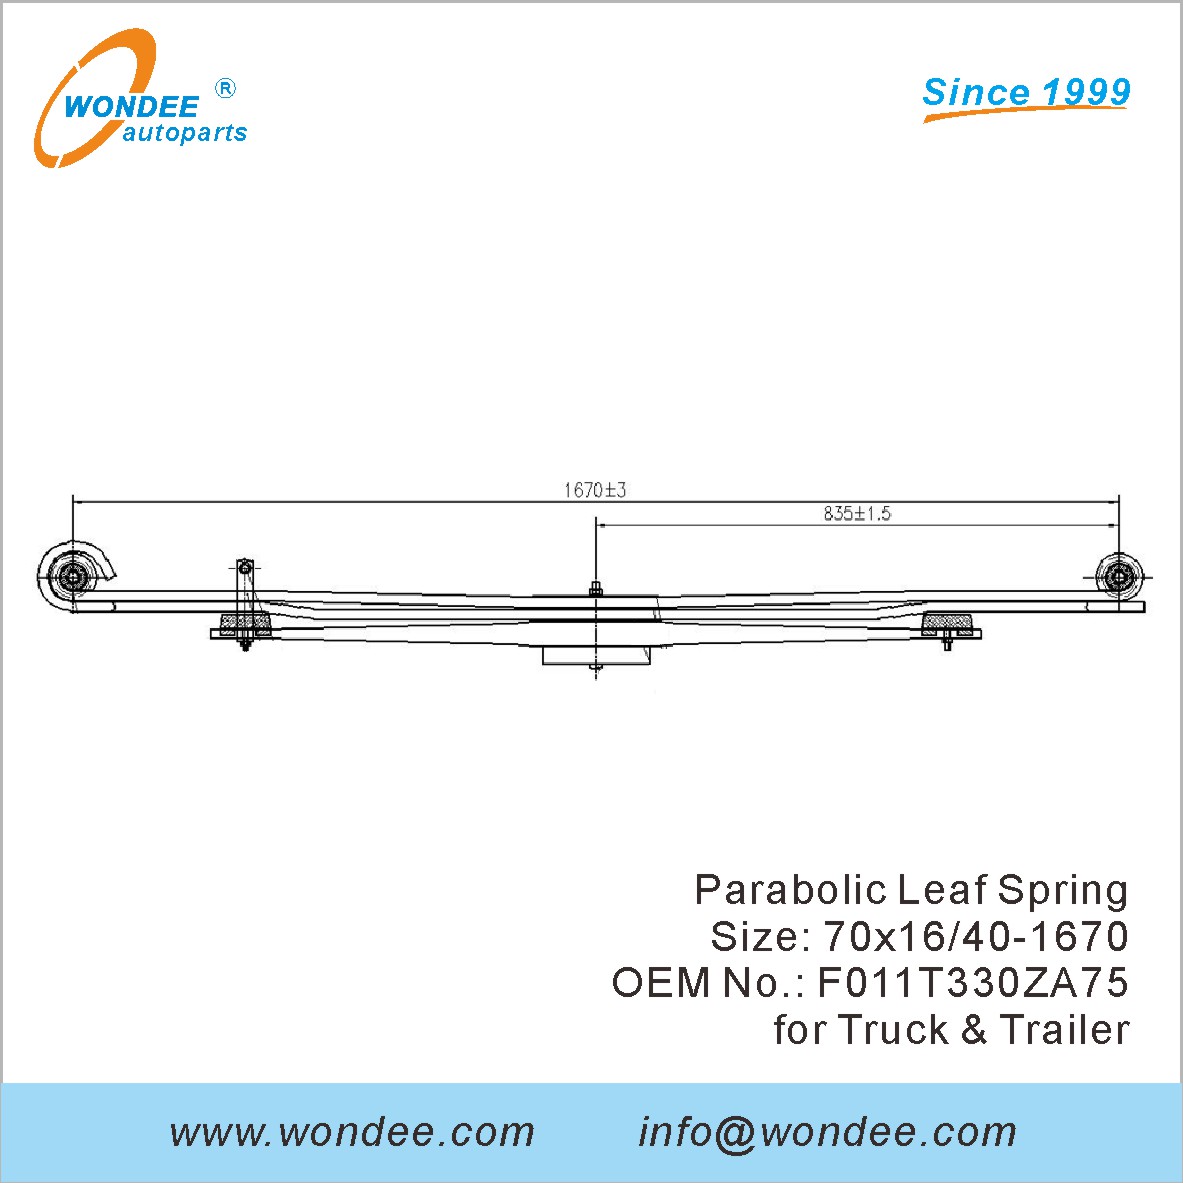 WONDEE heavy duty parabolic Leaf Spring OEM F011T330ZA75 for Truck & Trailer